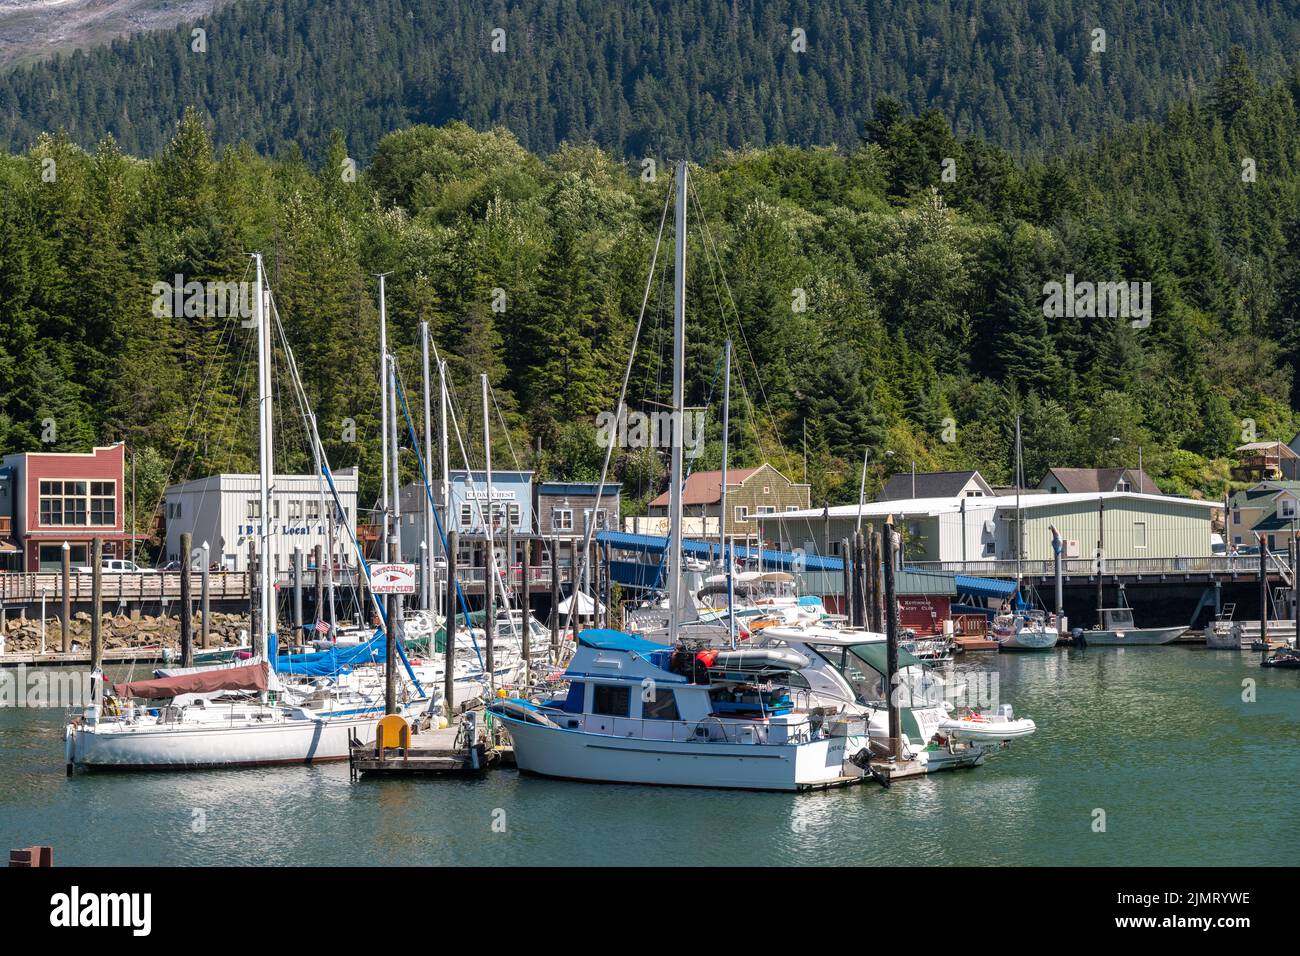 The Thomas Basin boat harbor in Ketchikan, Alaska. Stock Photo